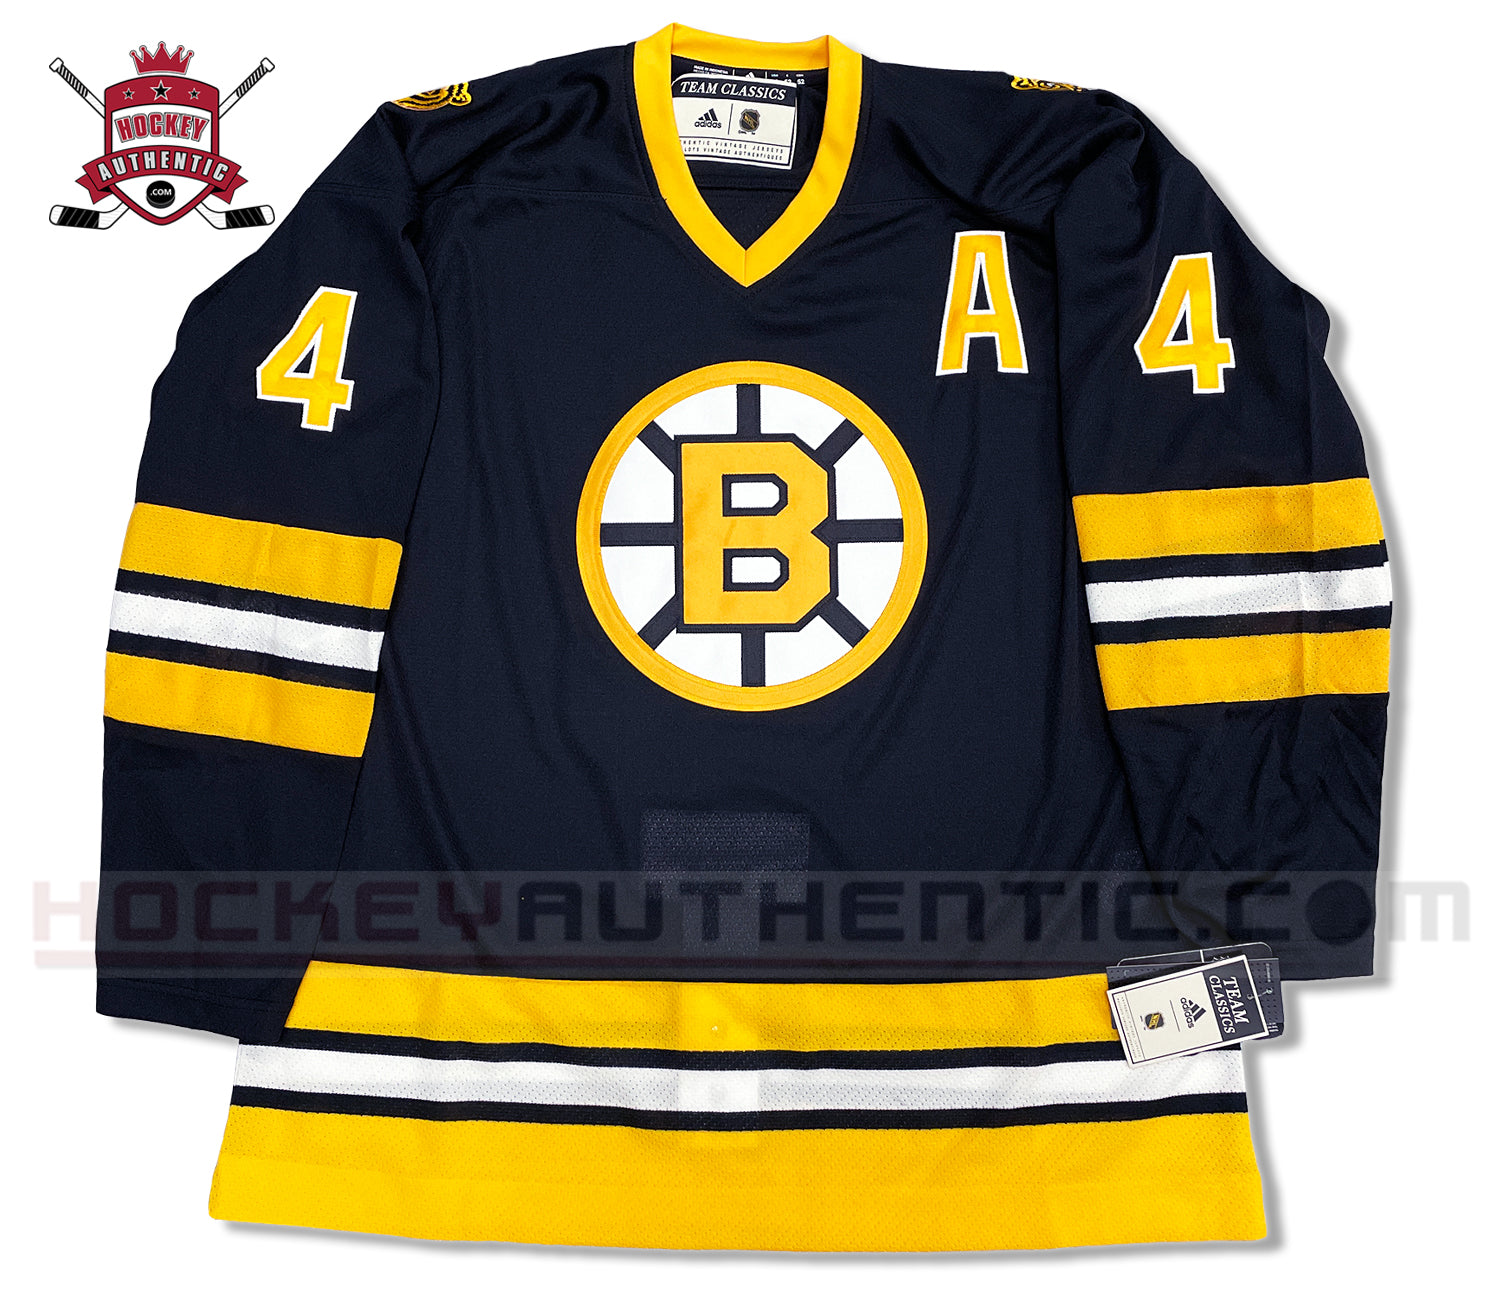 Boston Bruins Jerseys & Team Shop